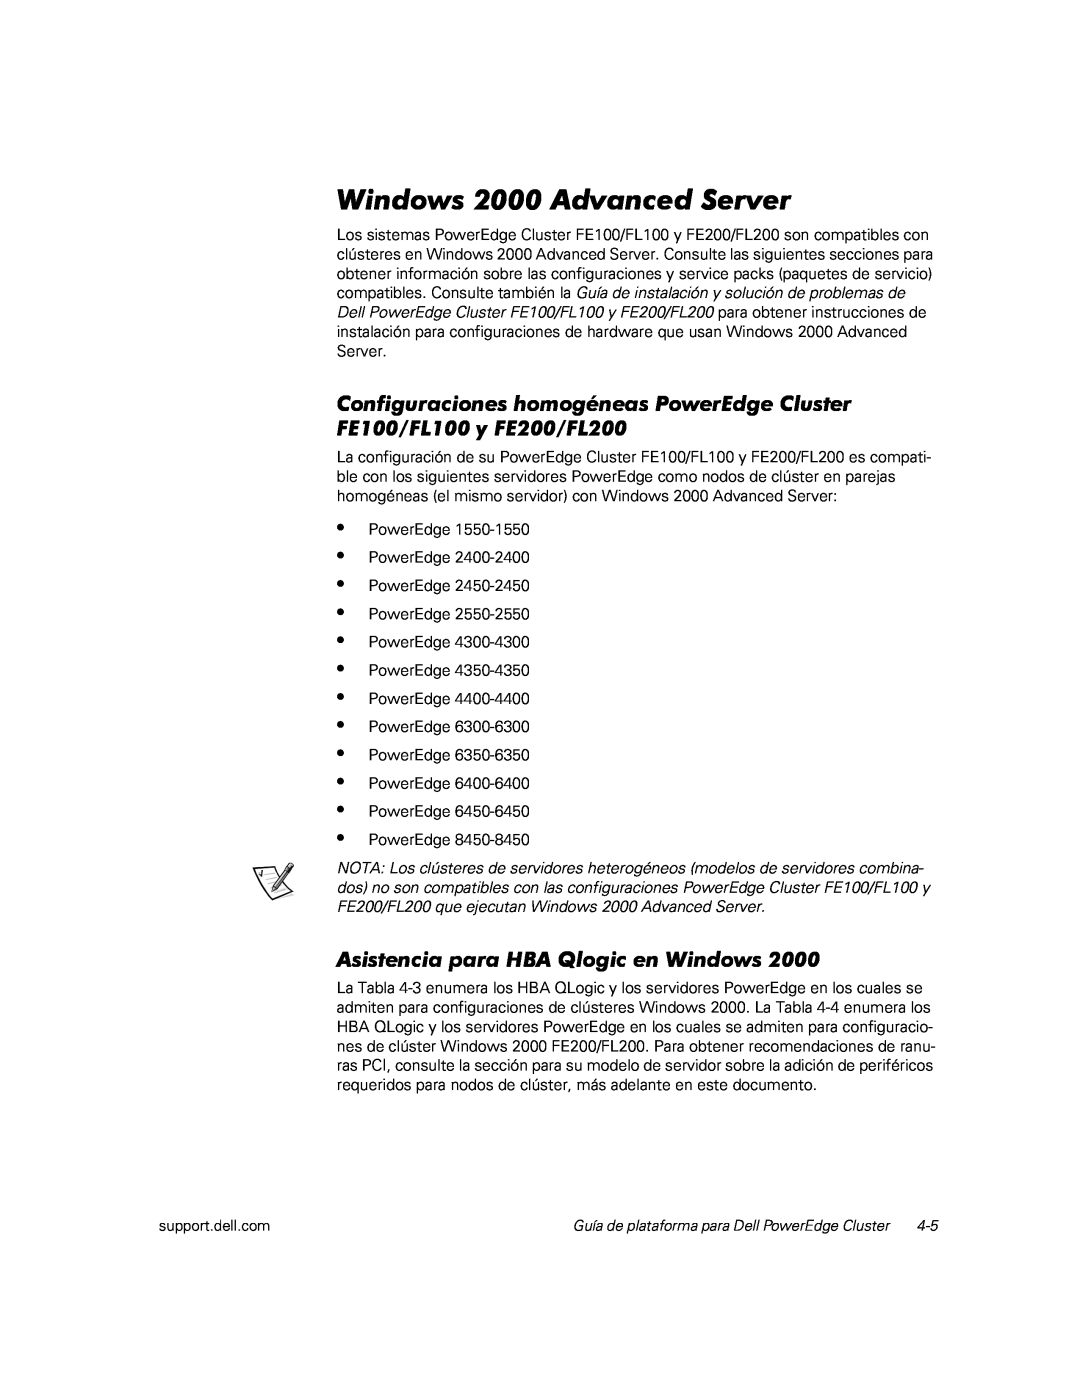 Dell FL200, FE100, FL100, FE200 Asistencia para HBA Qlogic en Windows, Windows 2000 Advanced Server, • • • • • • • • • • • • 